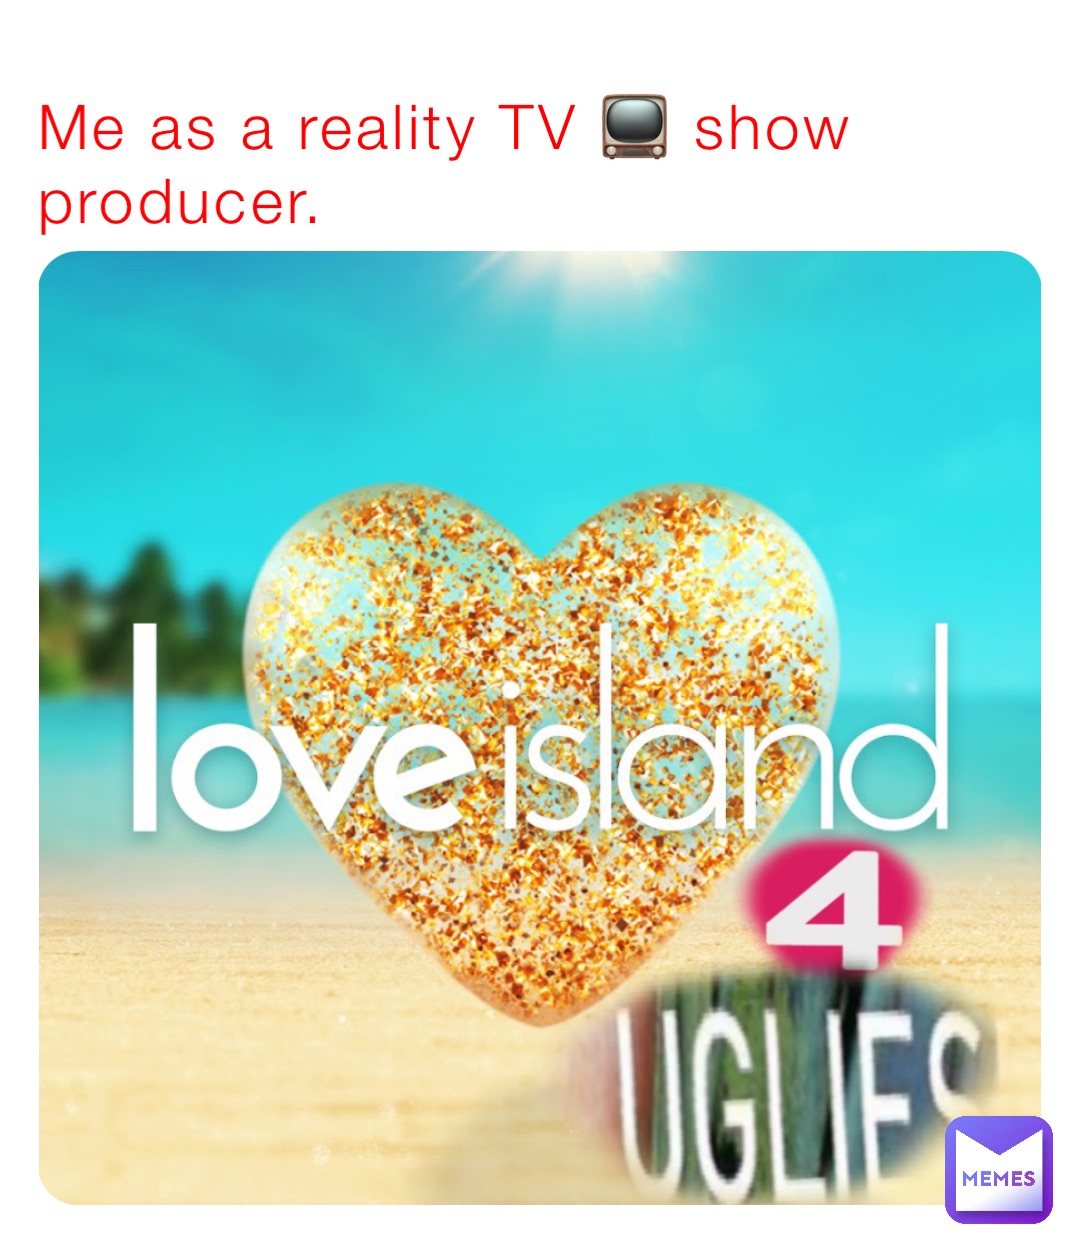 Me as a reality TV 📺 show producer.